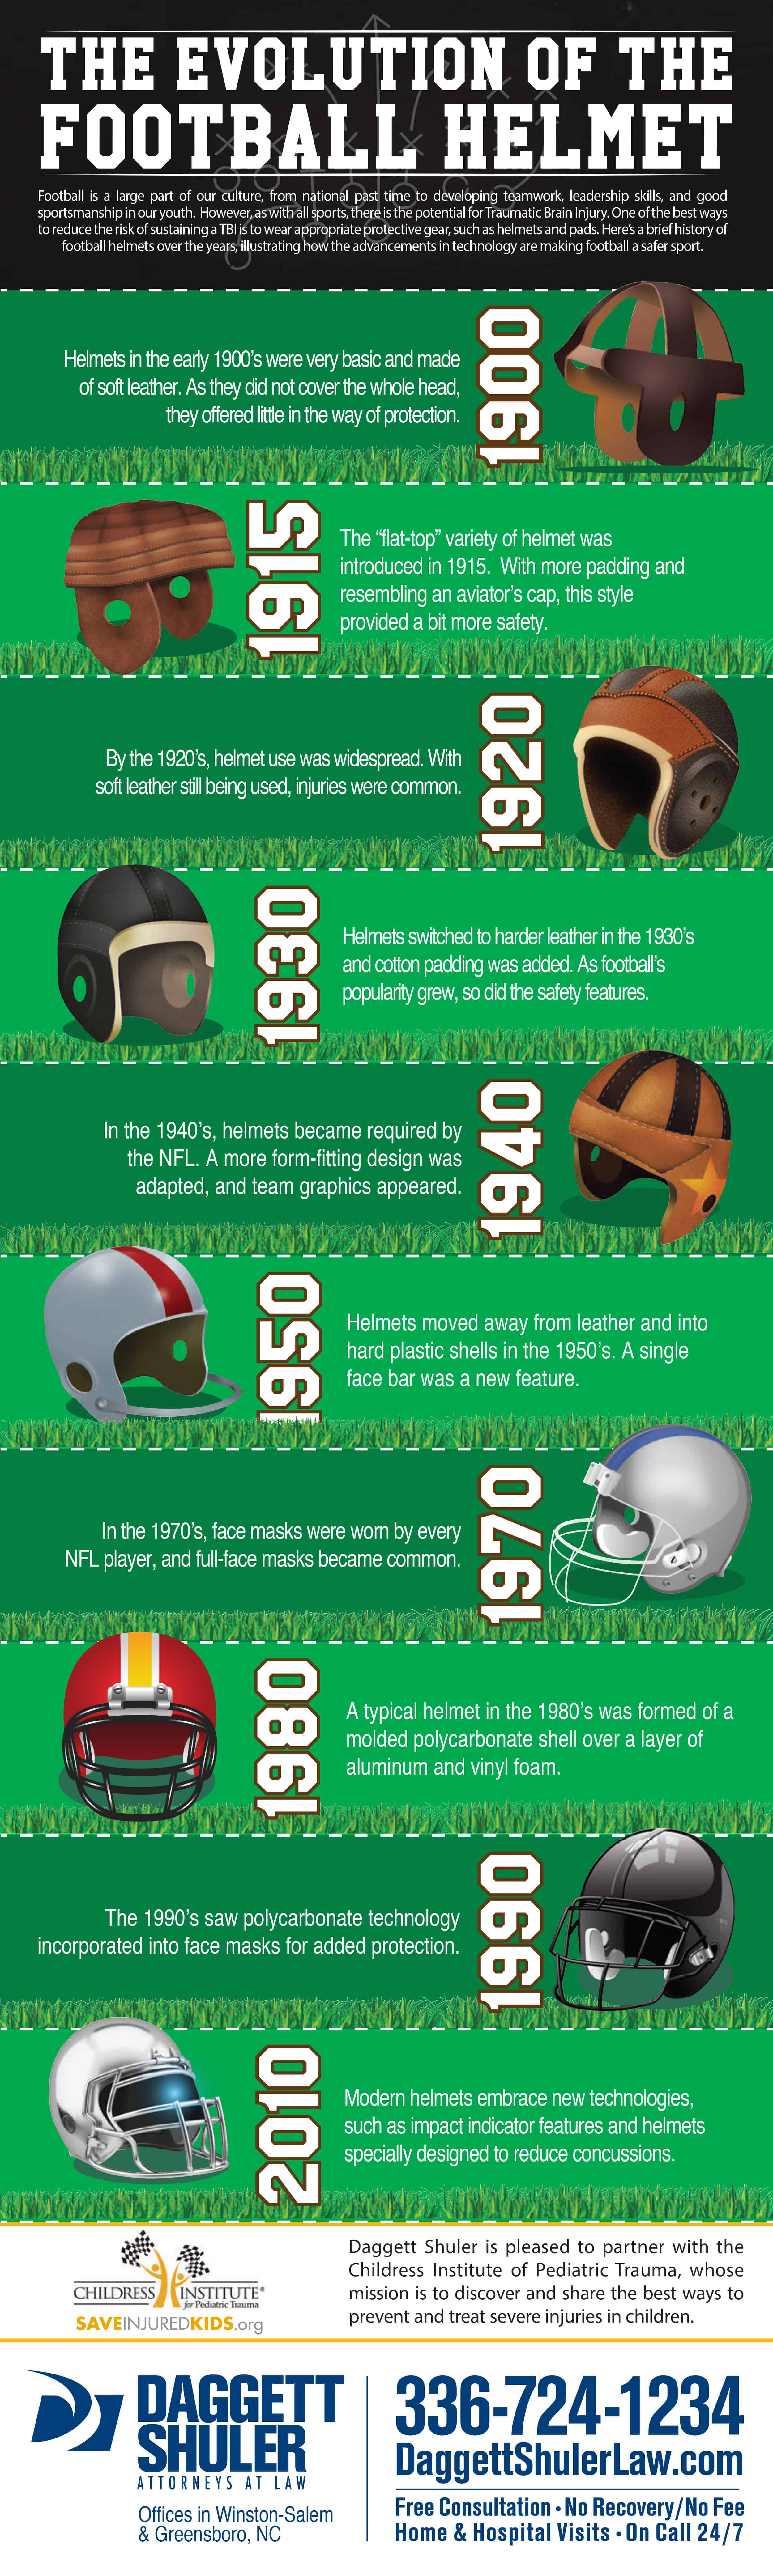 Evolution of the football helmet infographic